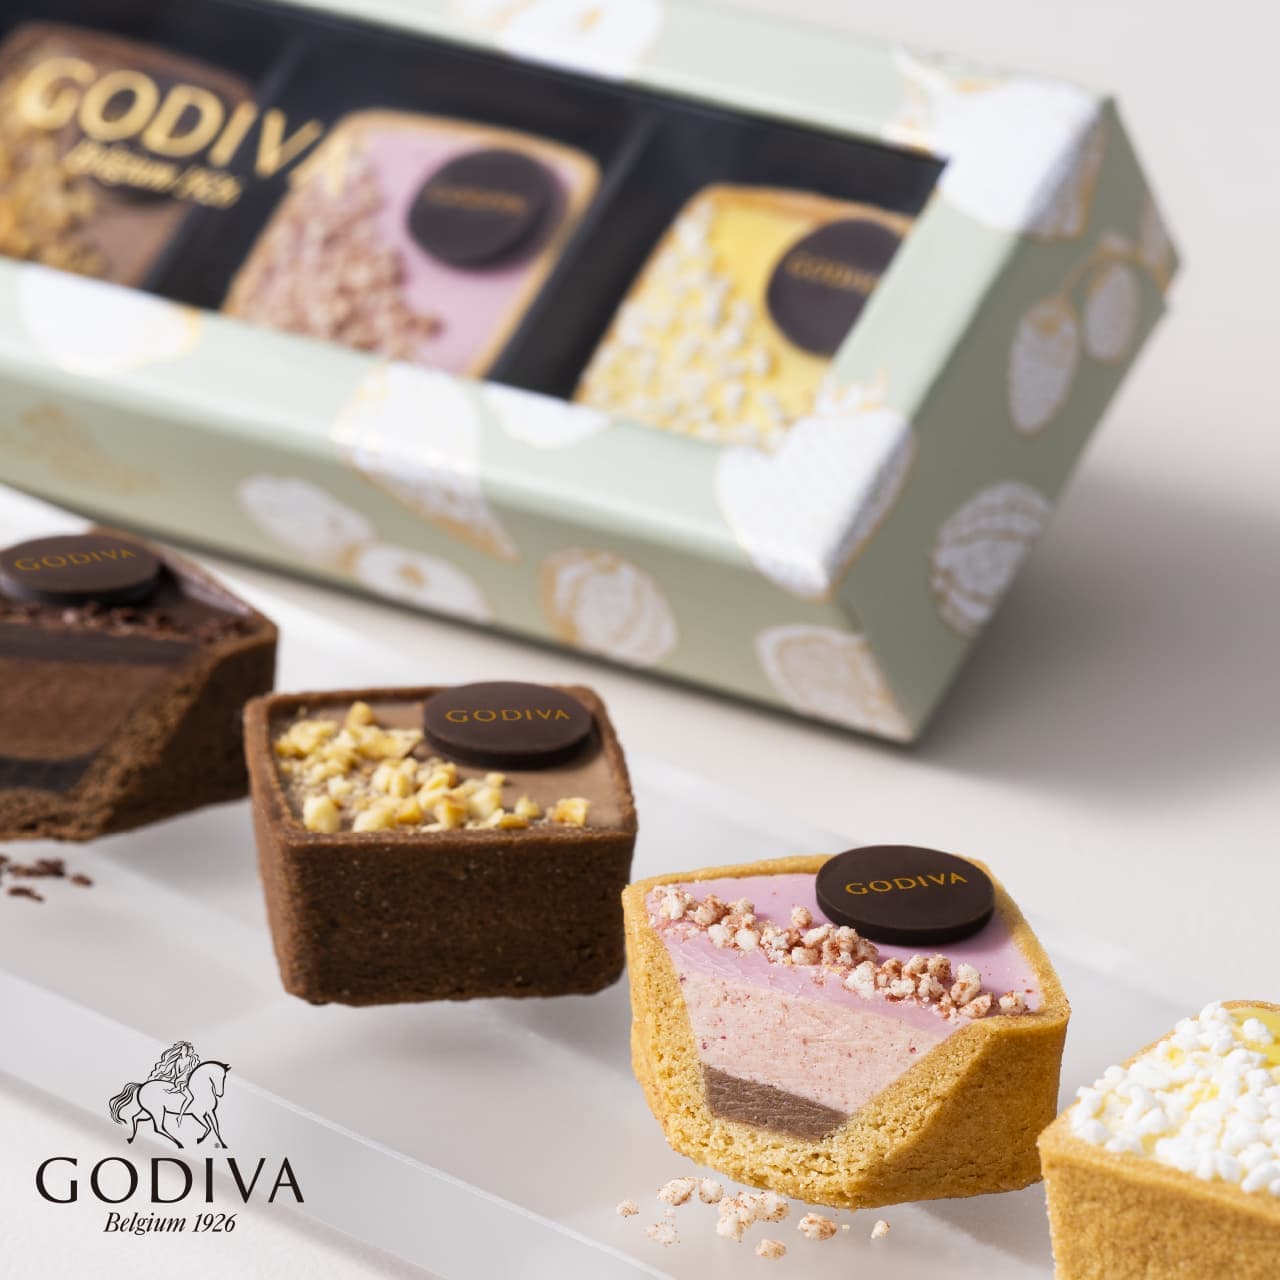 Godiva "Godiva Tarte Chocolat